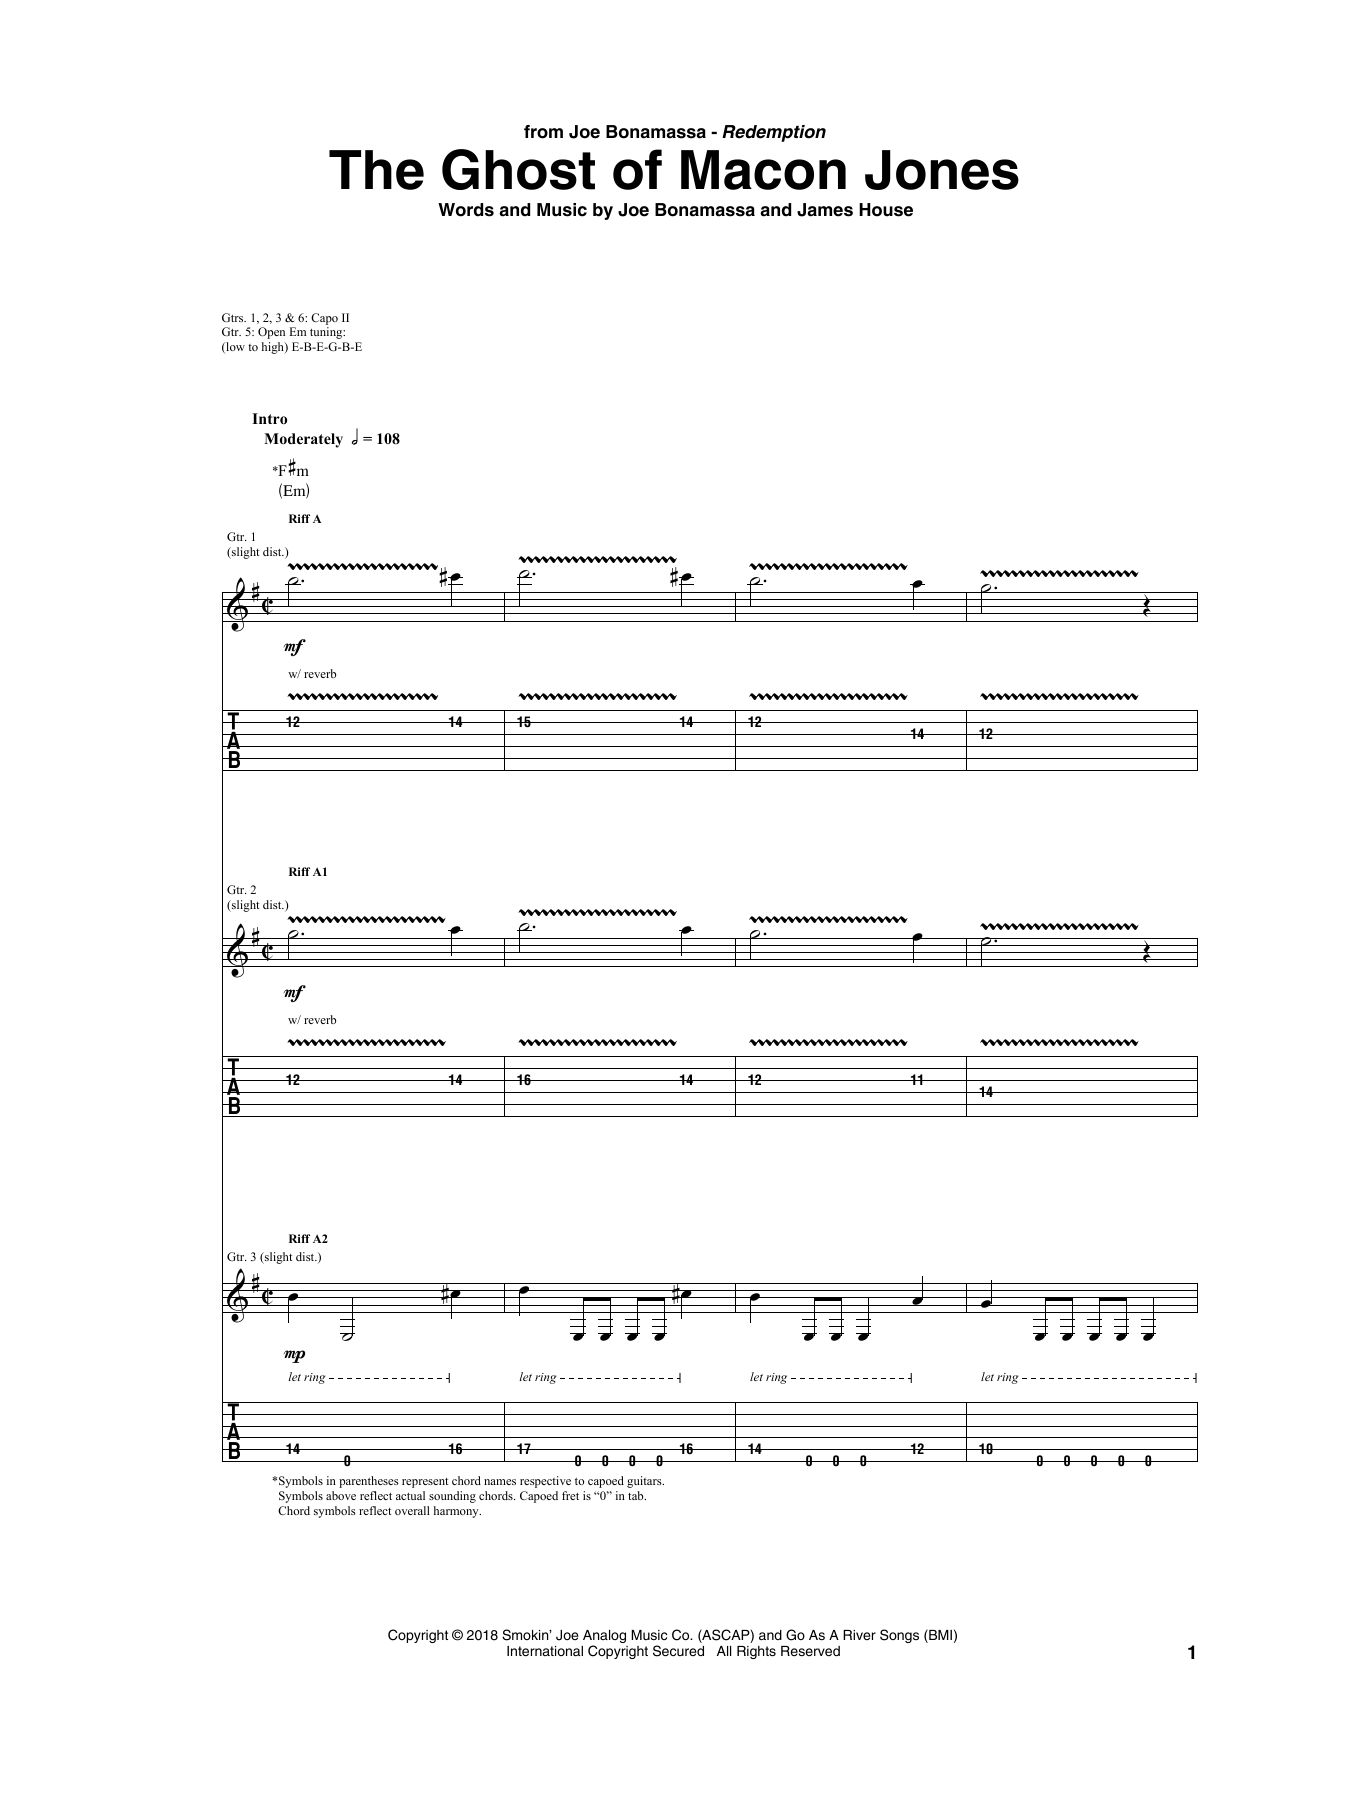 Download Joe Bonamassa The Ghost Of Macon Jones Sheet Music and learn how to play Guitar Tab PDF digital score in minutes